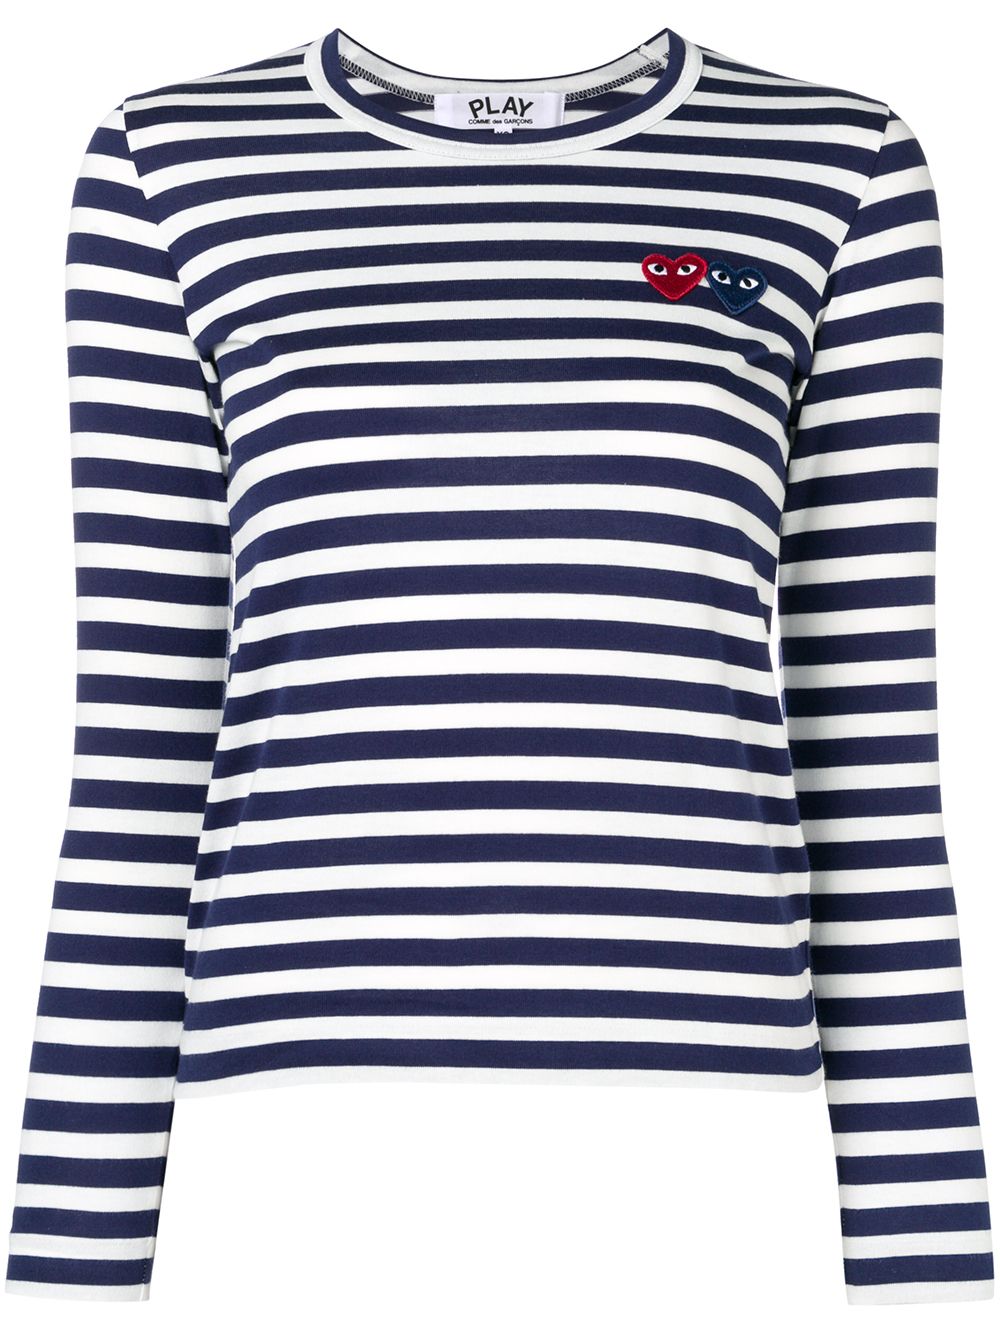 Comme Des Garçons Play double-heart logo striped T-shirt